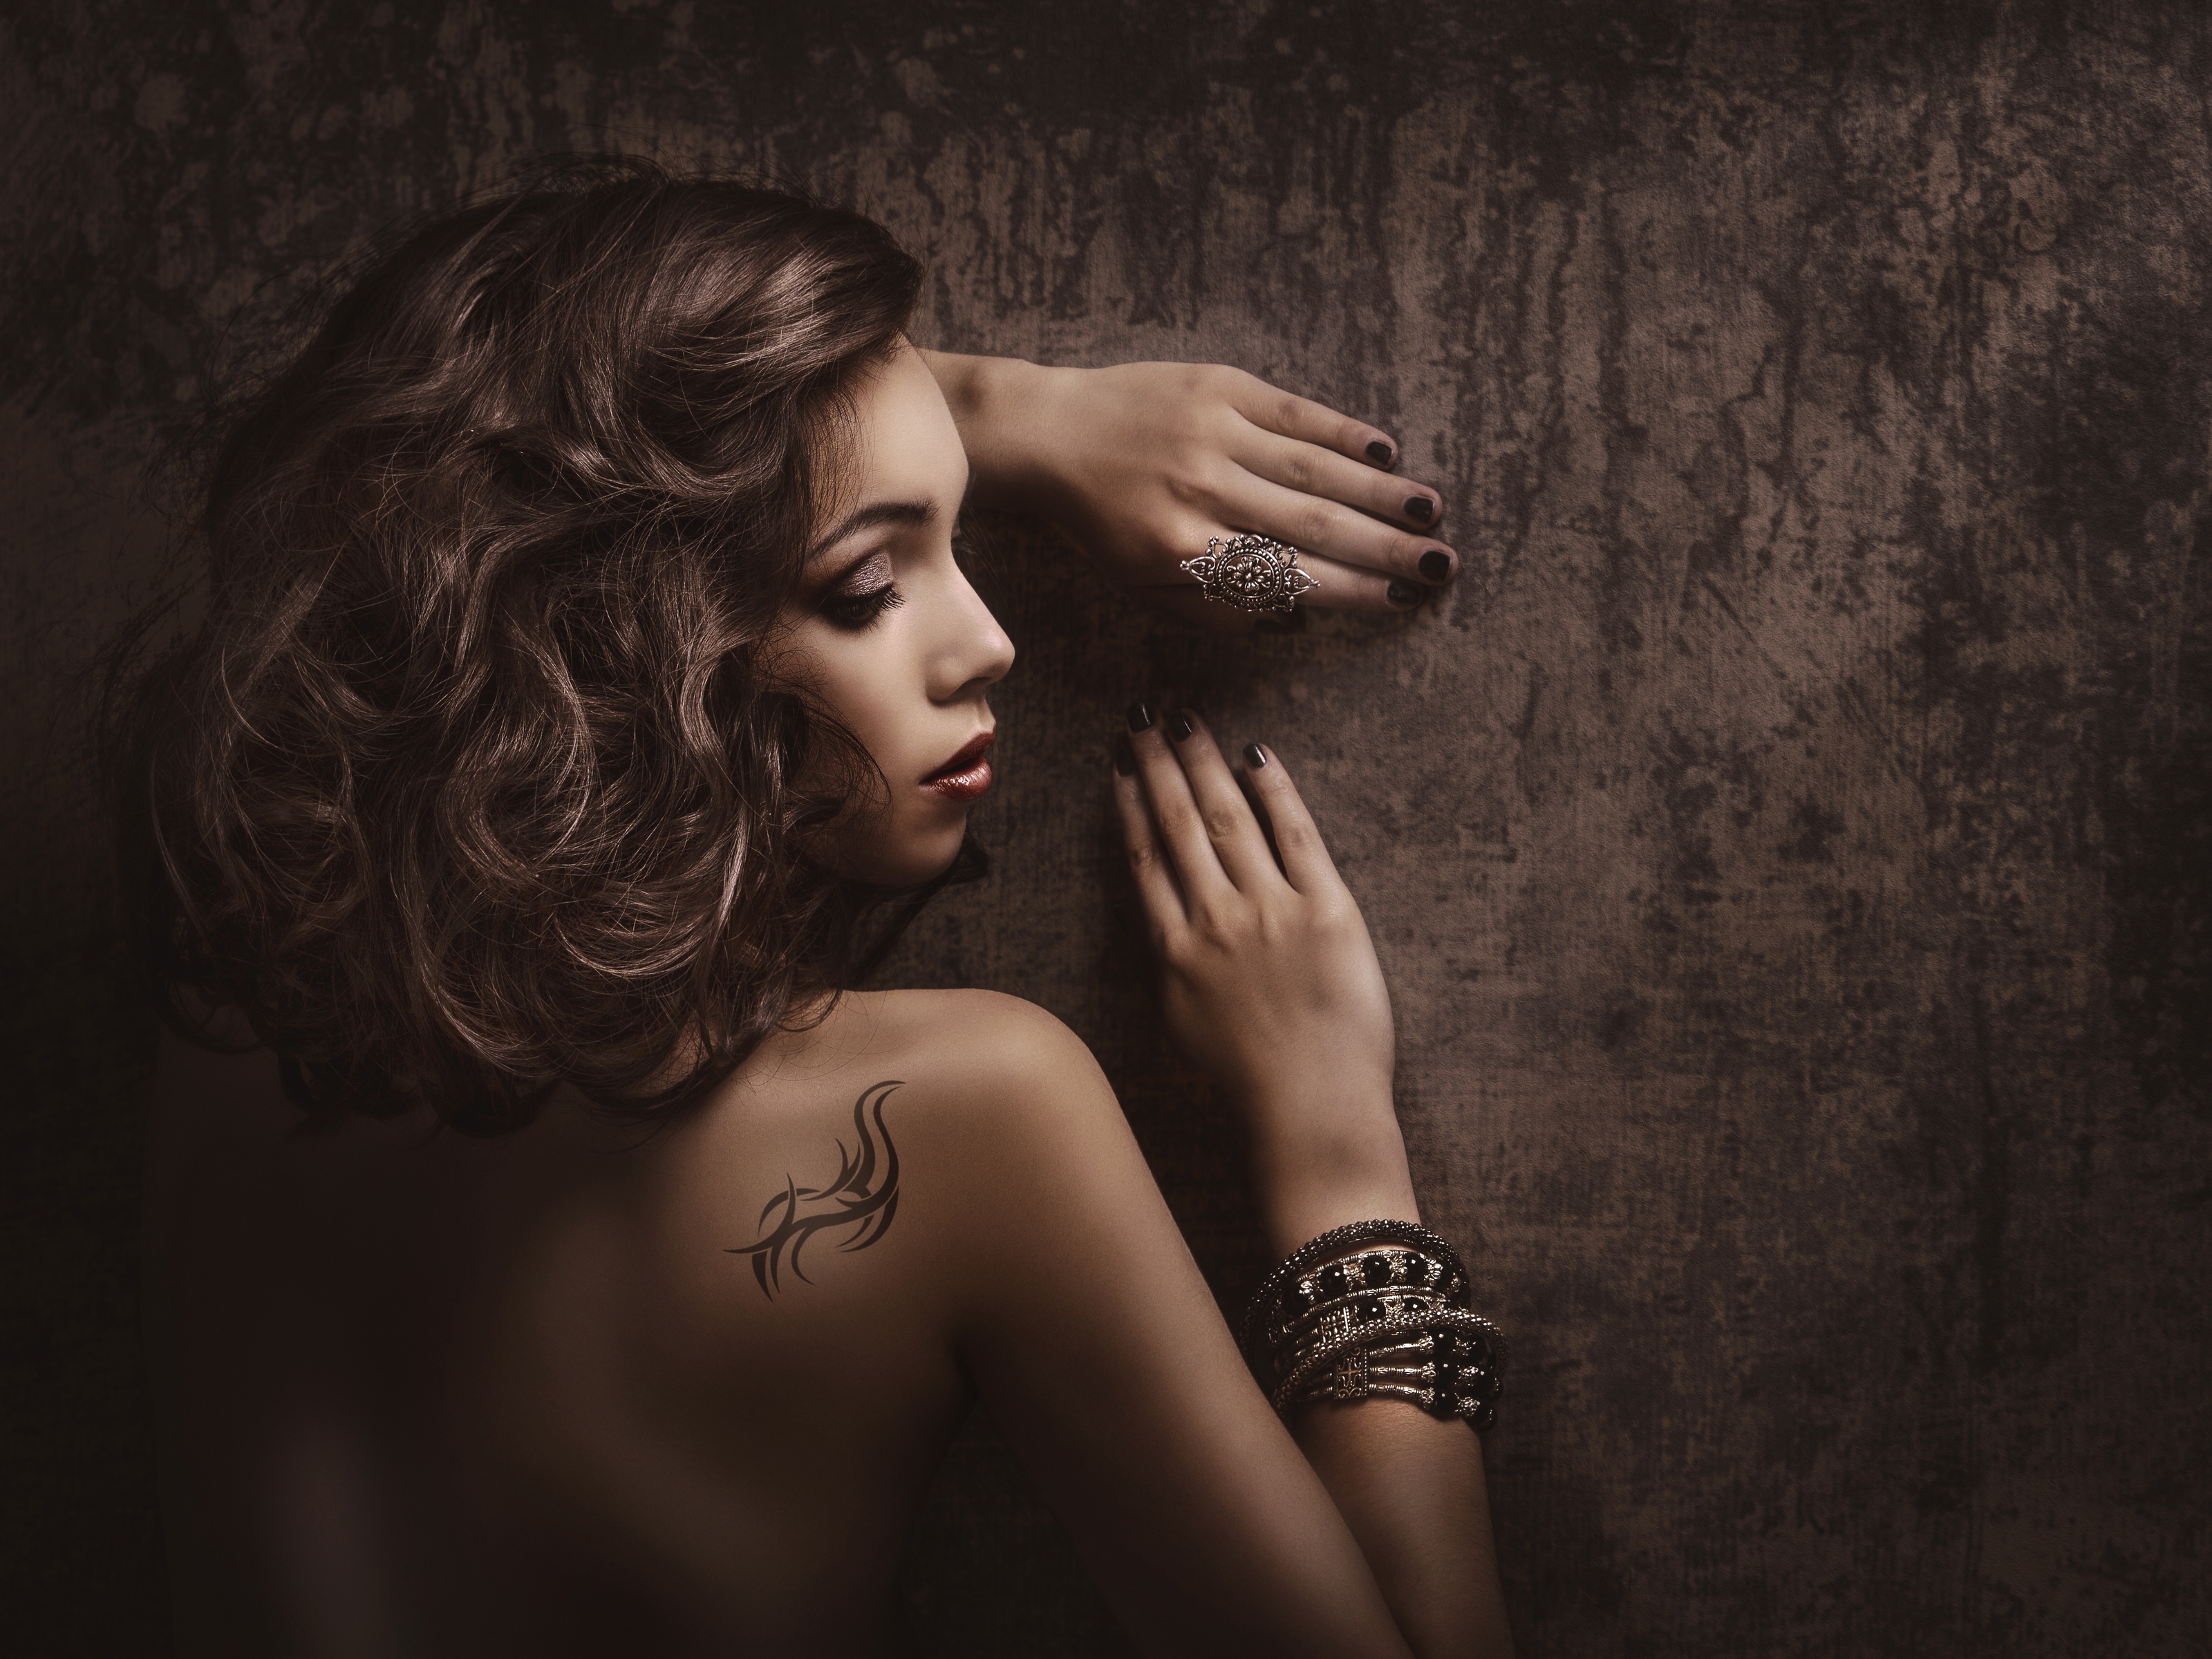 Image: Girl, profile, hair, curls, back, tattoo, bracelets